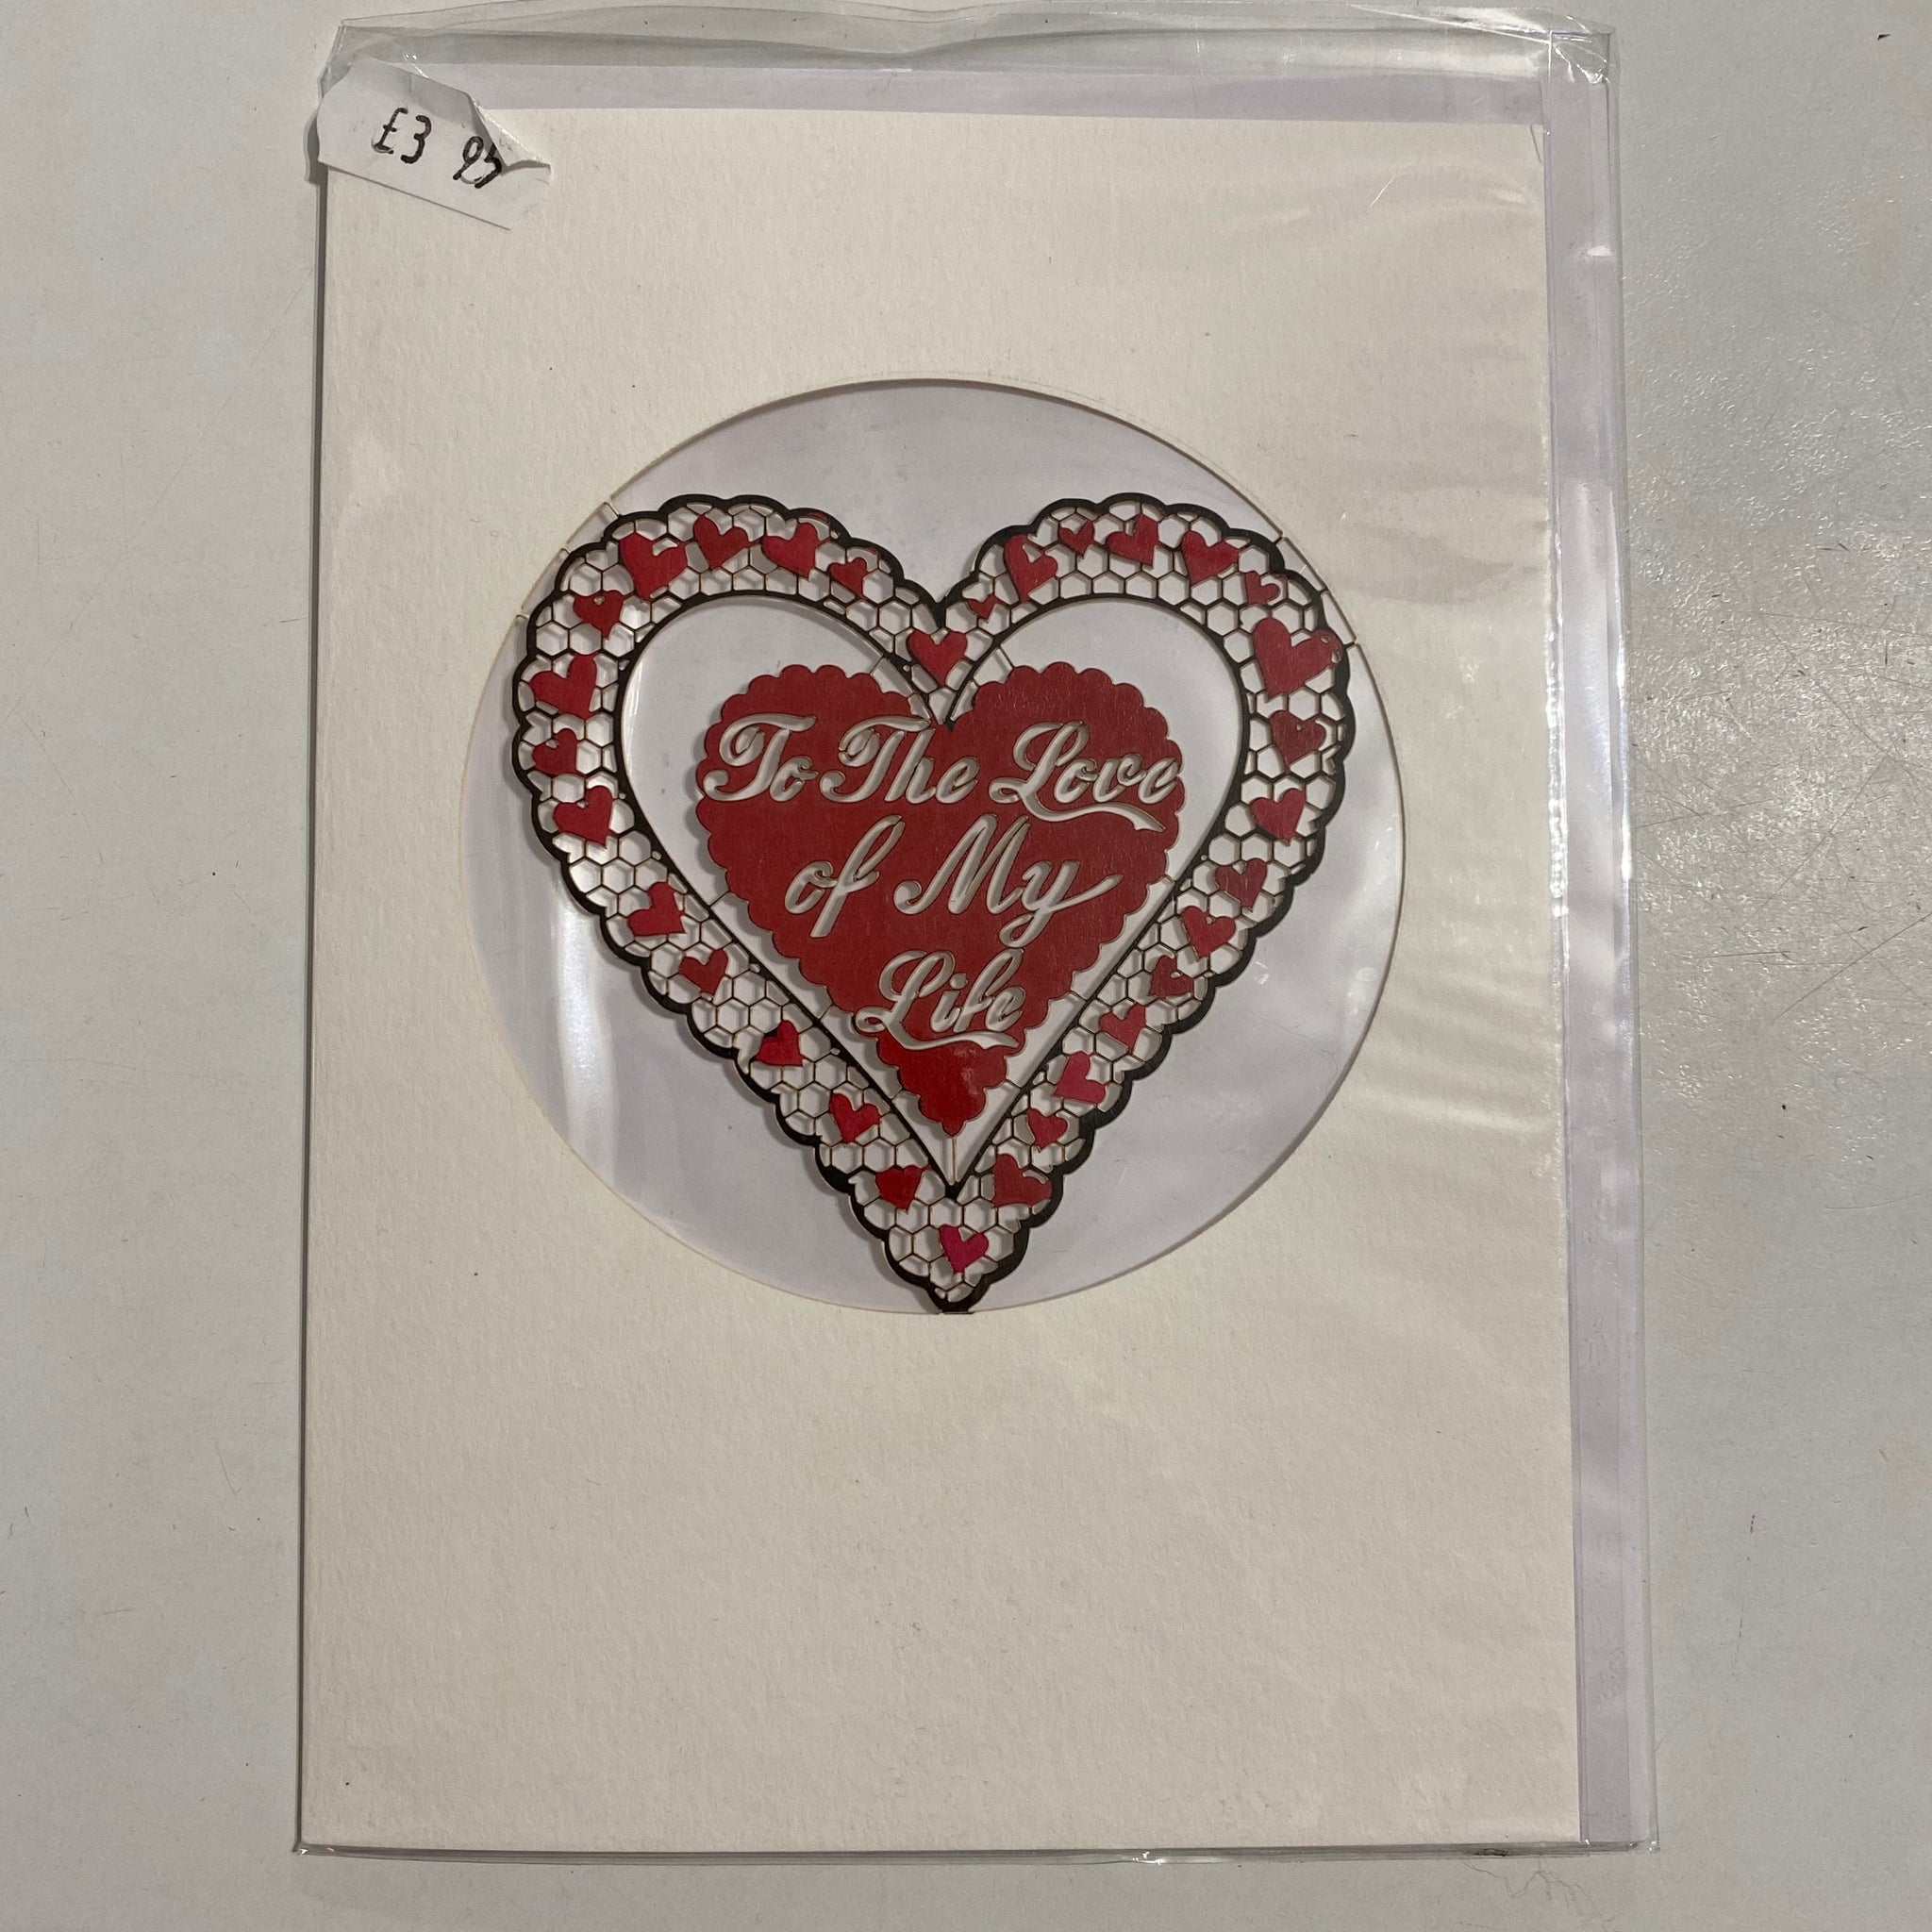 Heart Card cut out